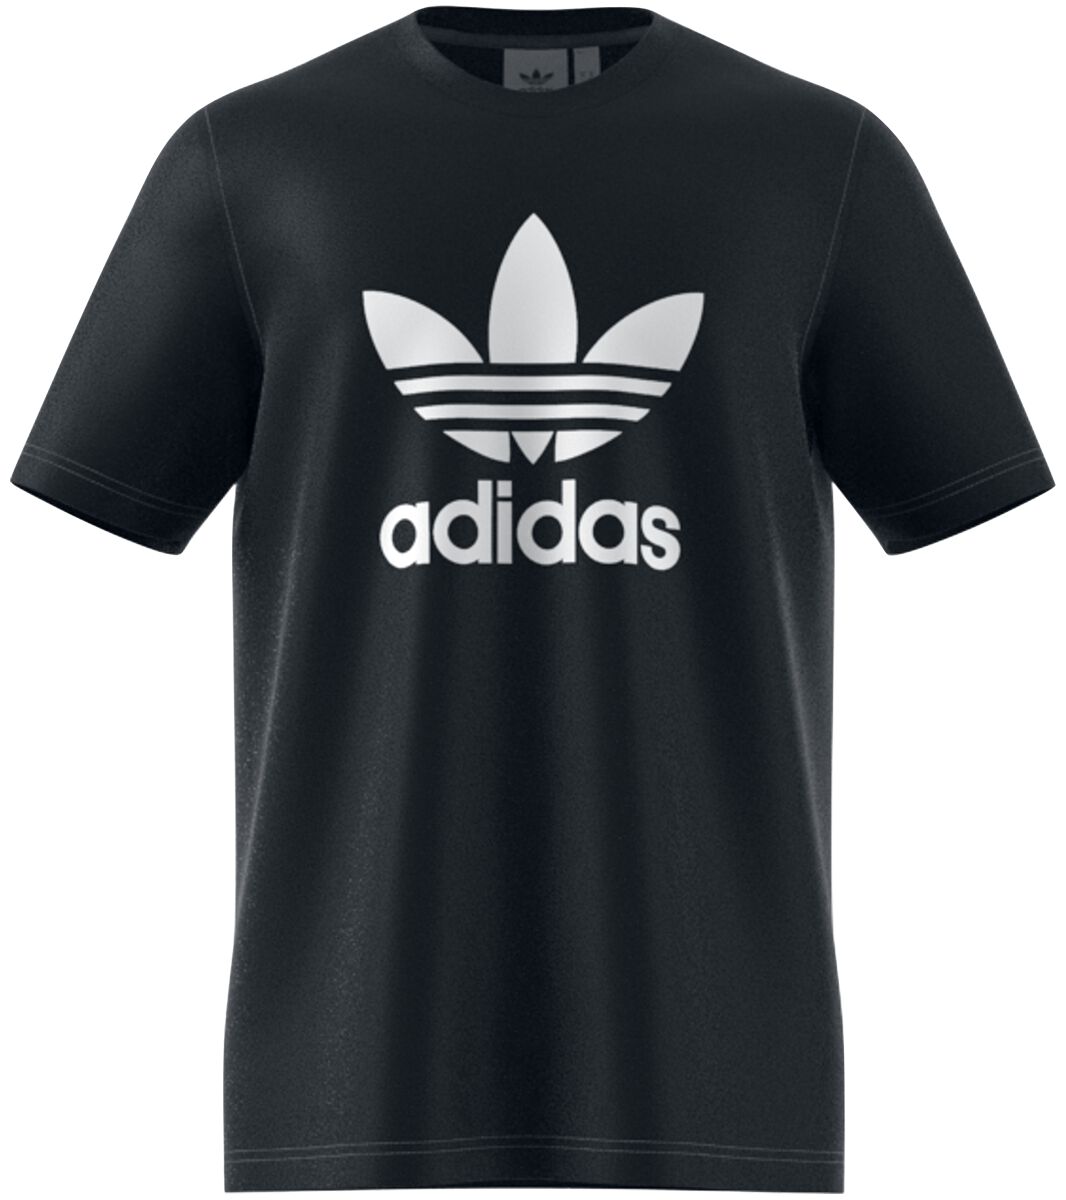 Adidas Trefoil T-Shirt T-Shirt black